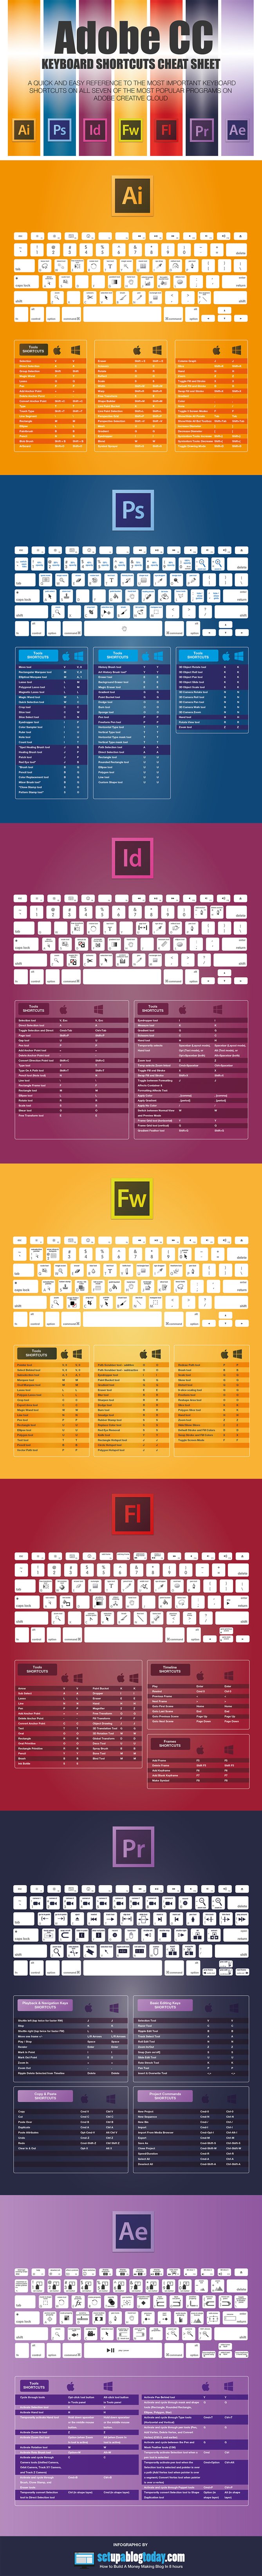 2015-ultimate-adobe-cc-keyboard-shortcuts-cheatsheet.jpg